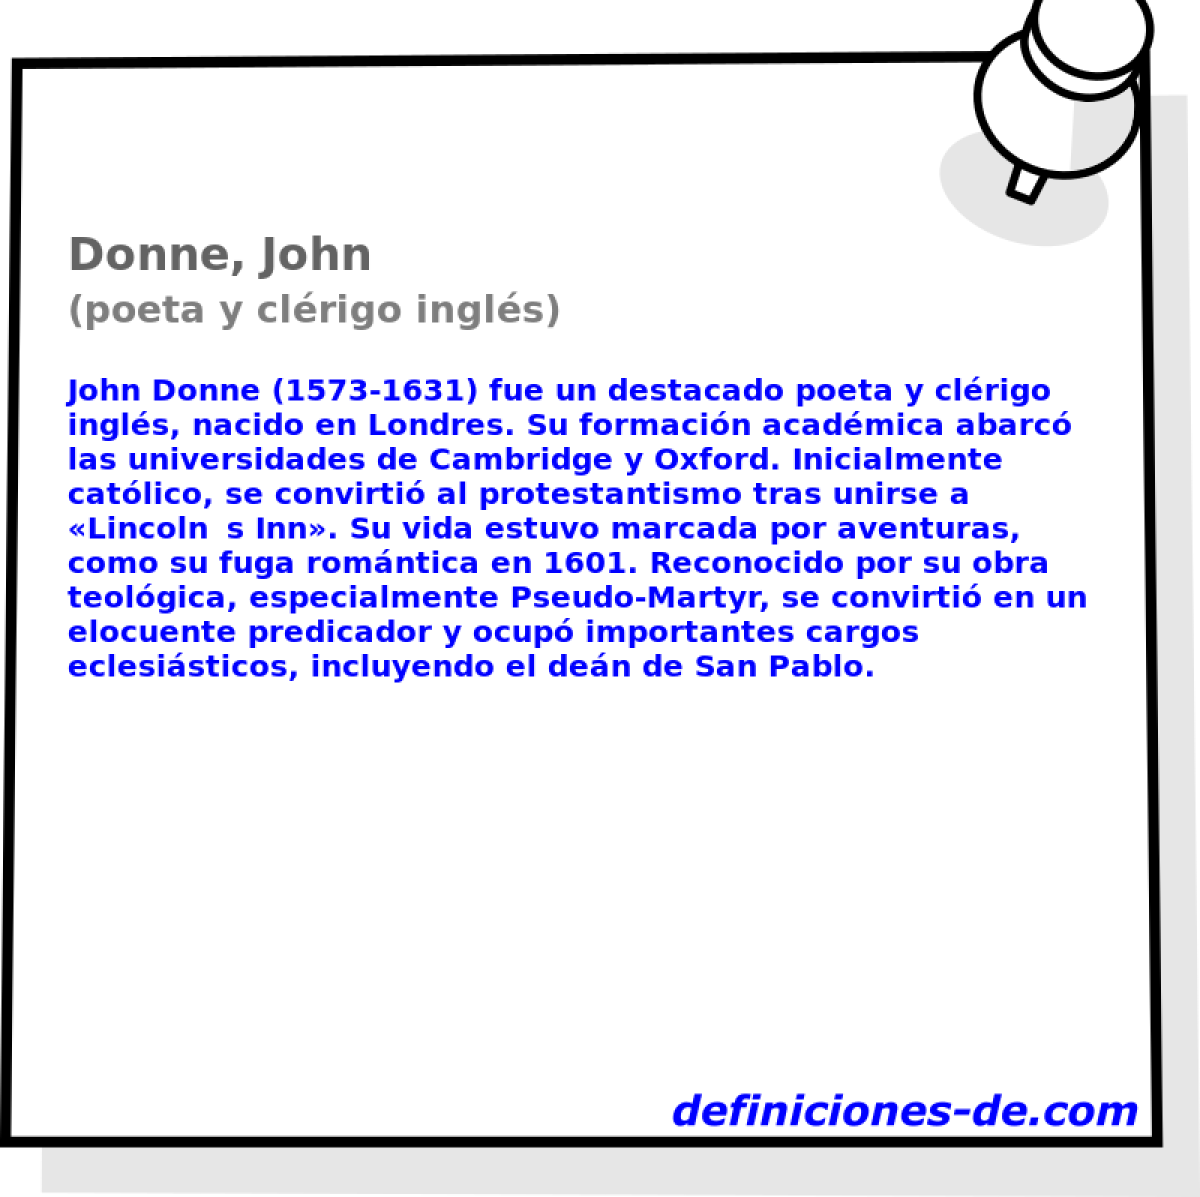 Donne, John (poeta y clrigo ingls)